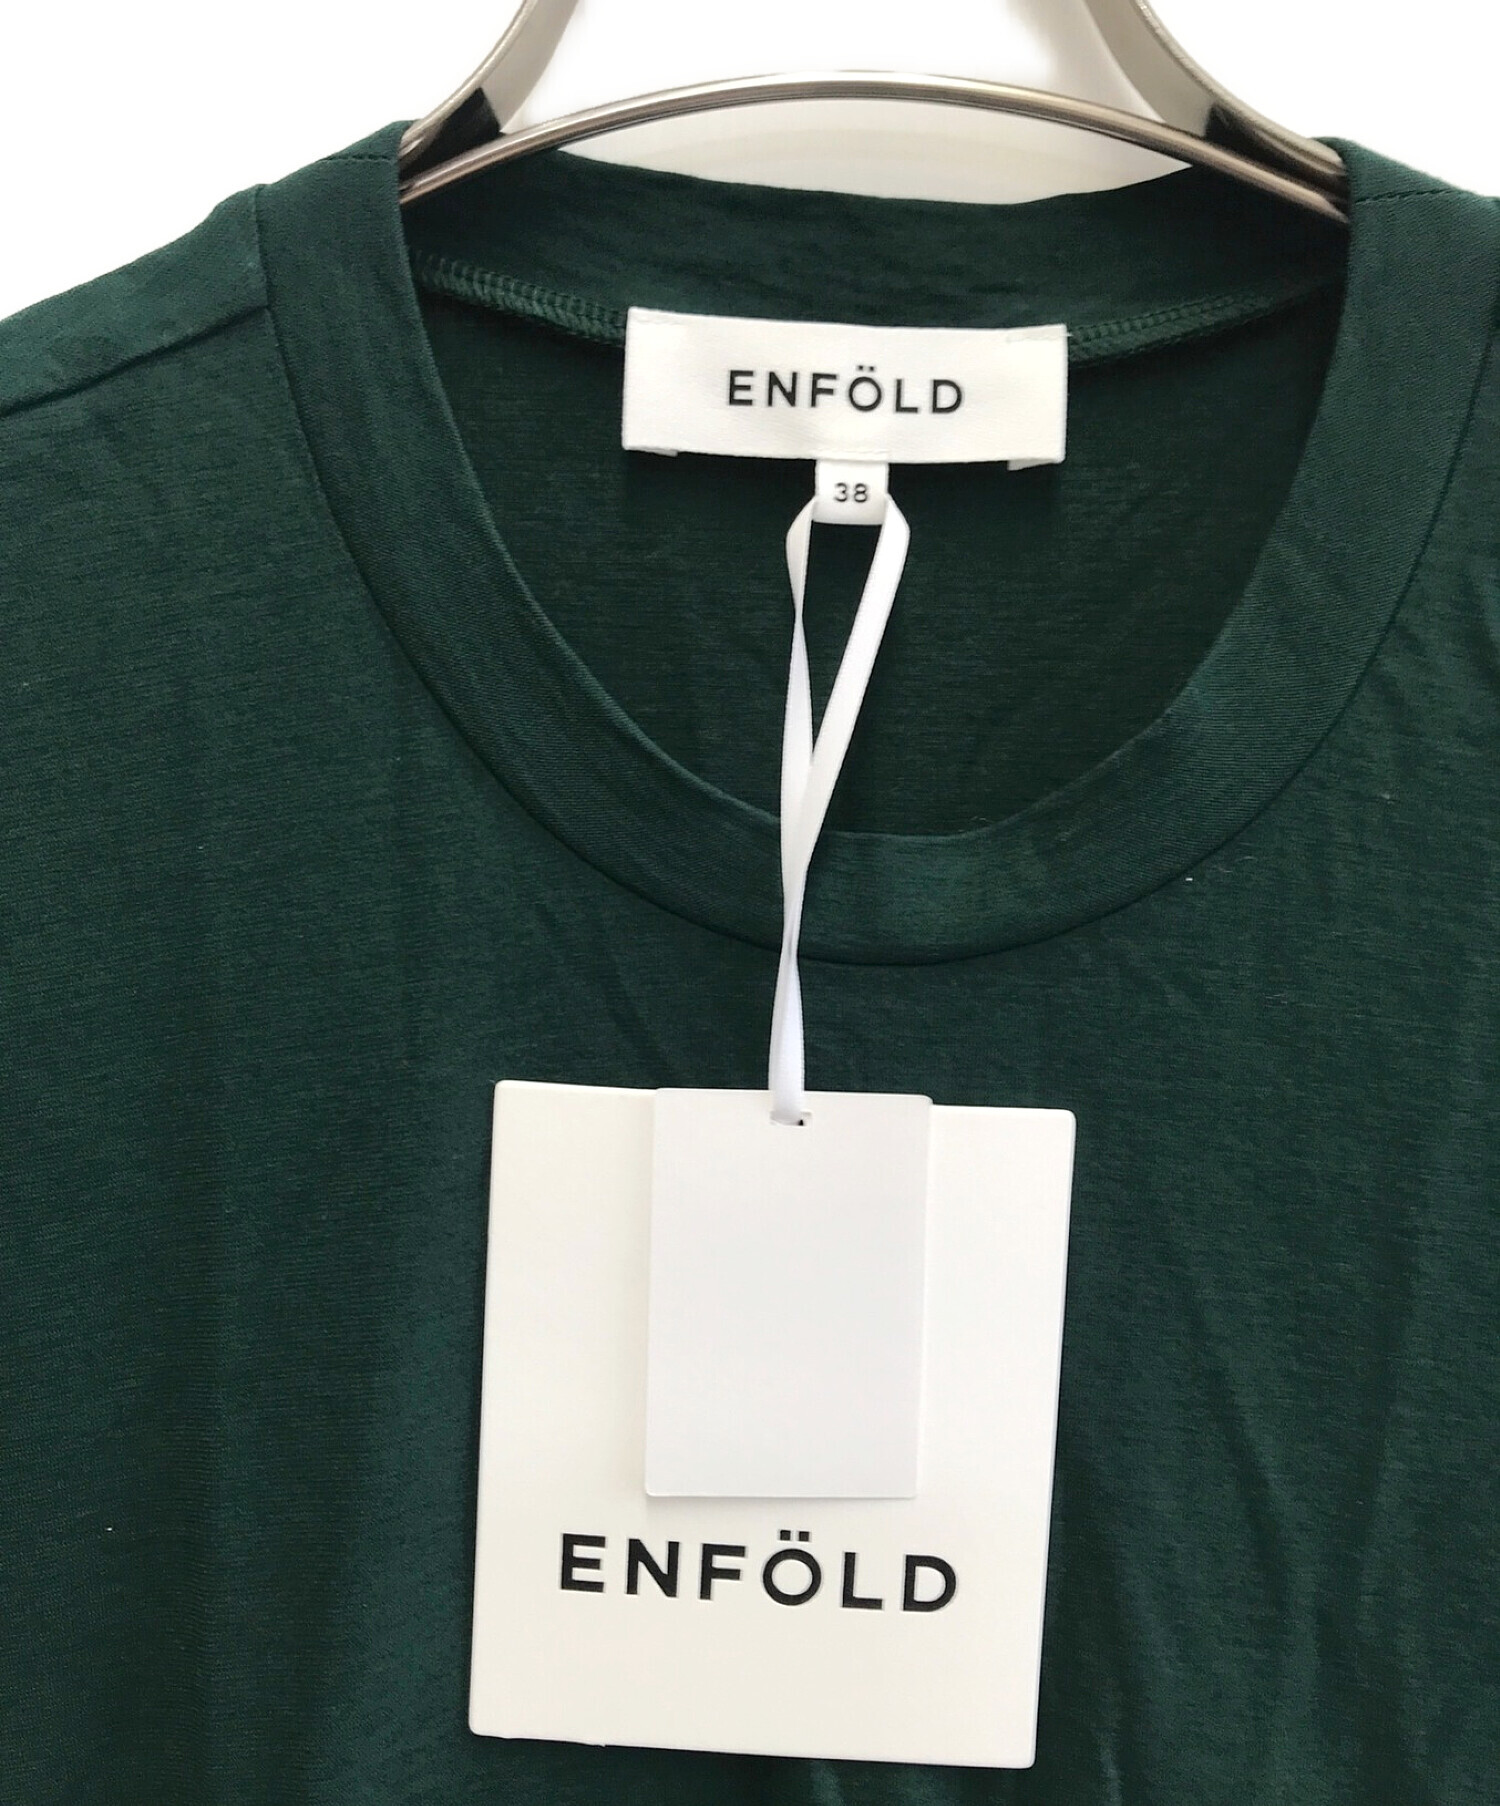 ENFOLD (エンフォルド) ハイツイスト天竺アシンメトリータンクトップ - エル・ショップ グリーン サイズ:38 未使用品